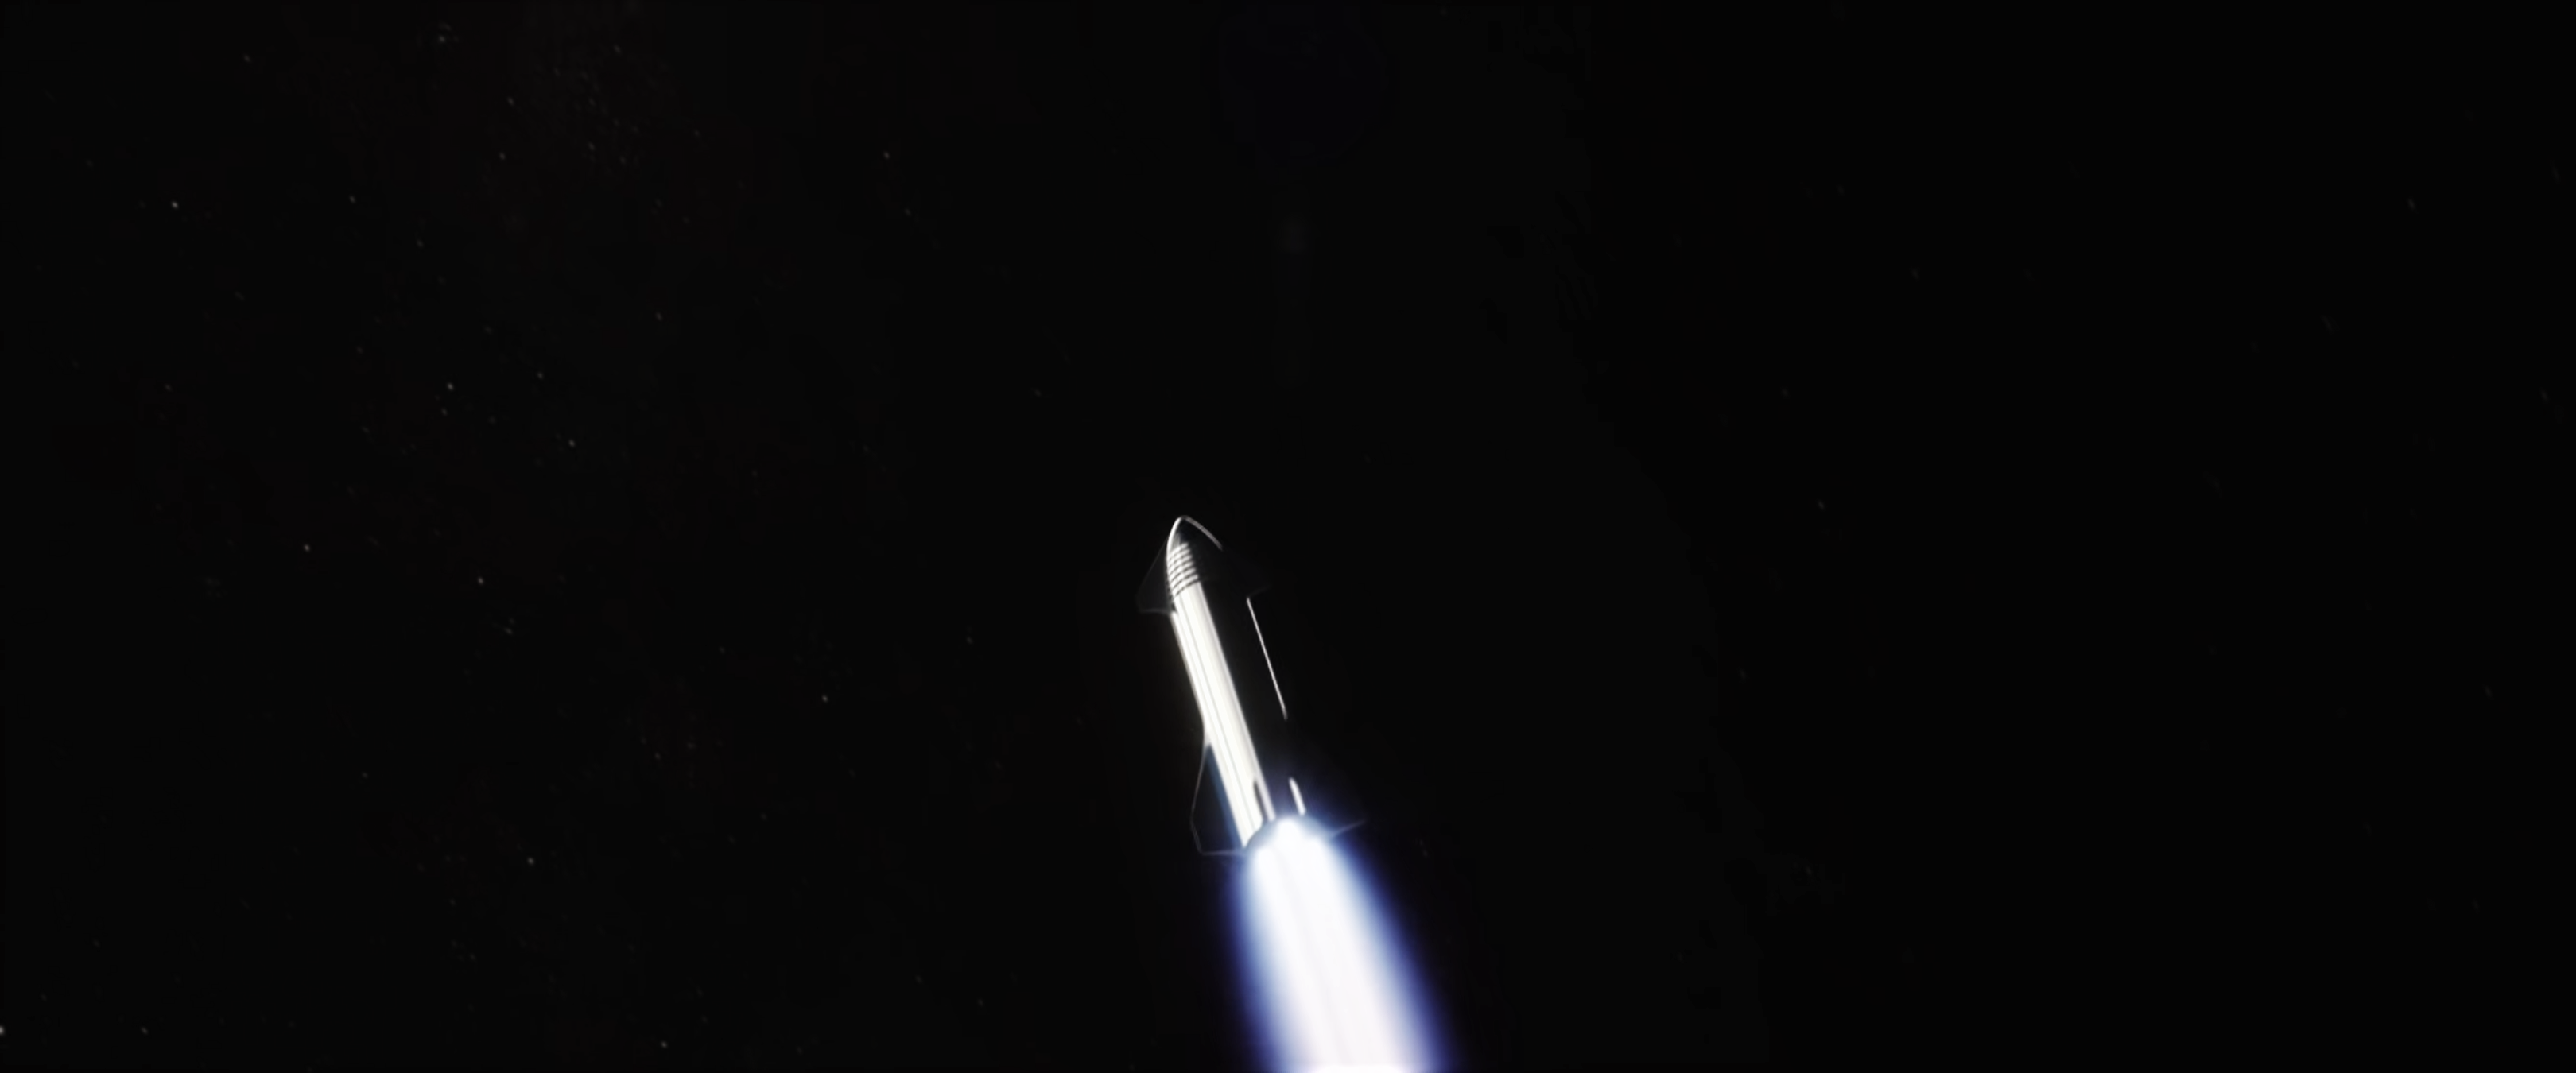 Starship Super Heavy 2019 (SpaceX) orbit raising 1 crop